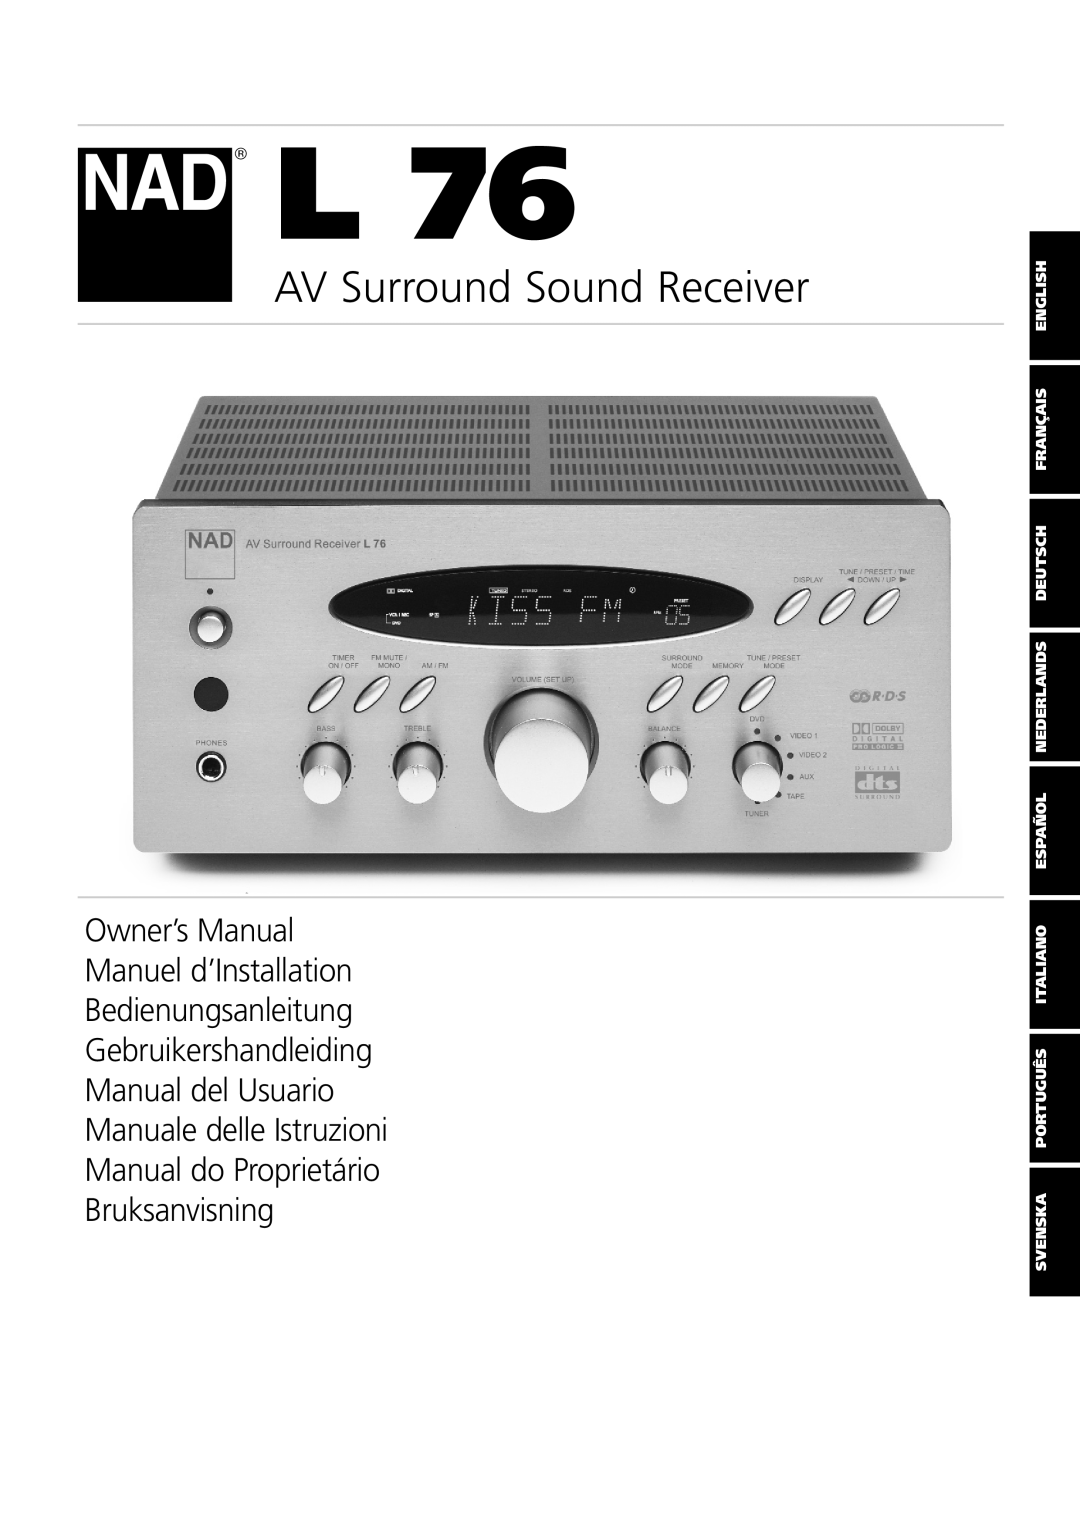 NAD L 76 owner manual AV Surround Sound Receiver, Bedienungsanleitung Gebruikershandleiding 